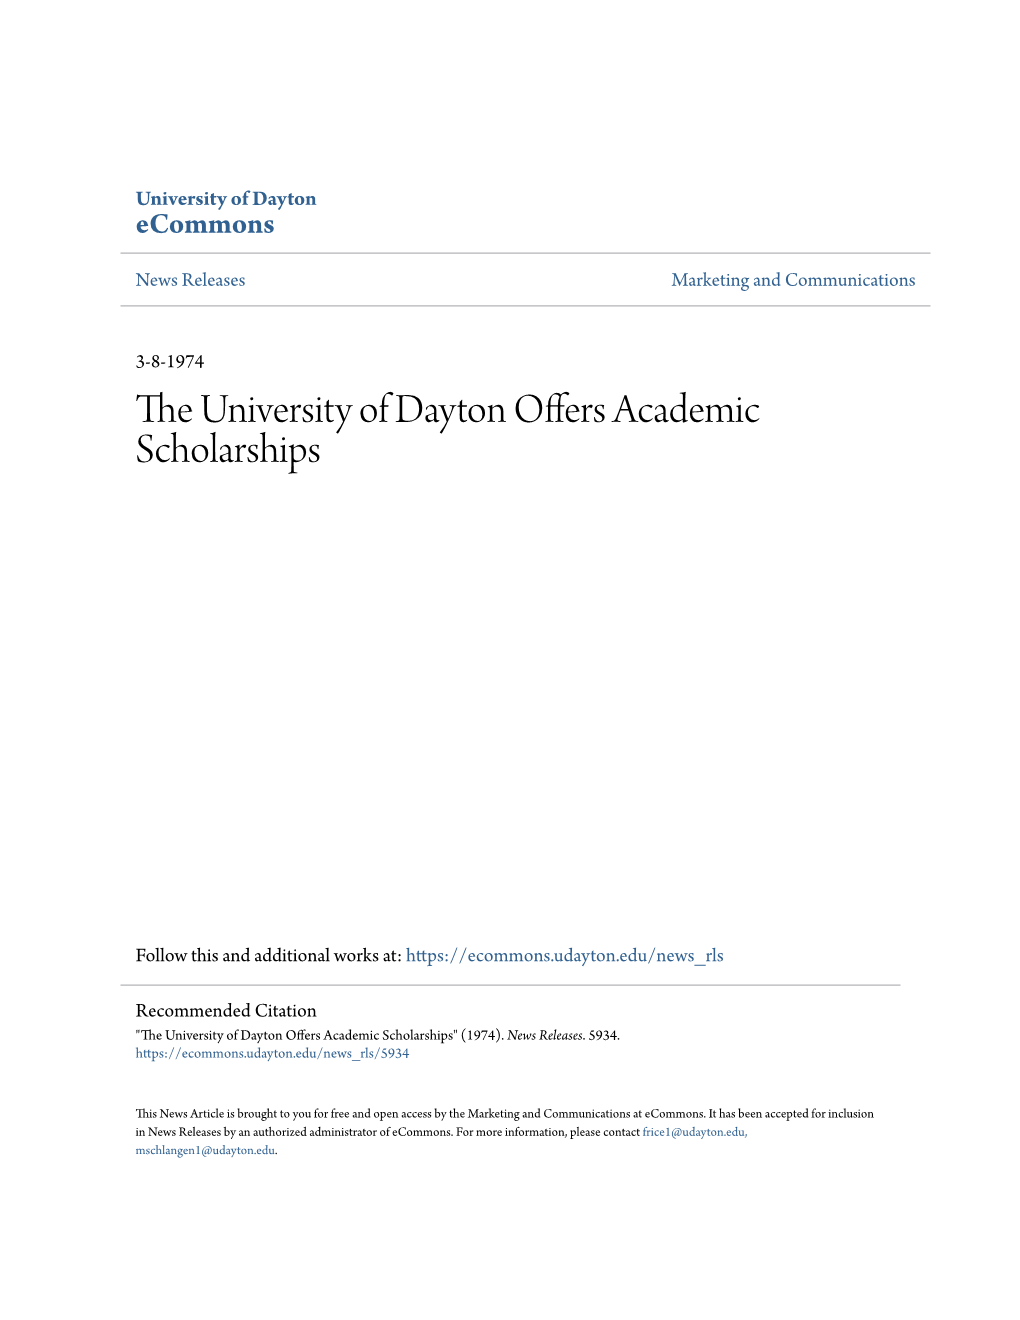 The University of Dayton Offers Academic Scholarships